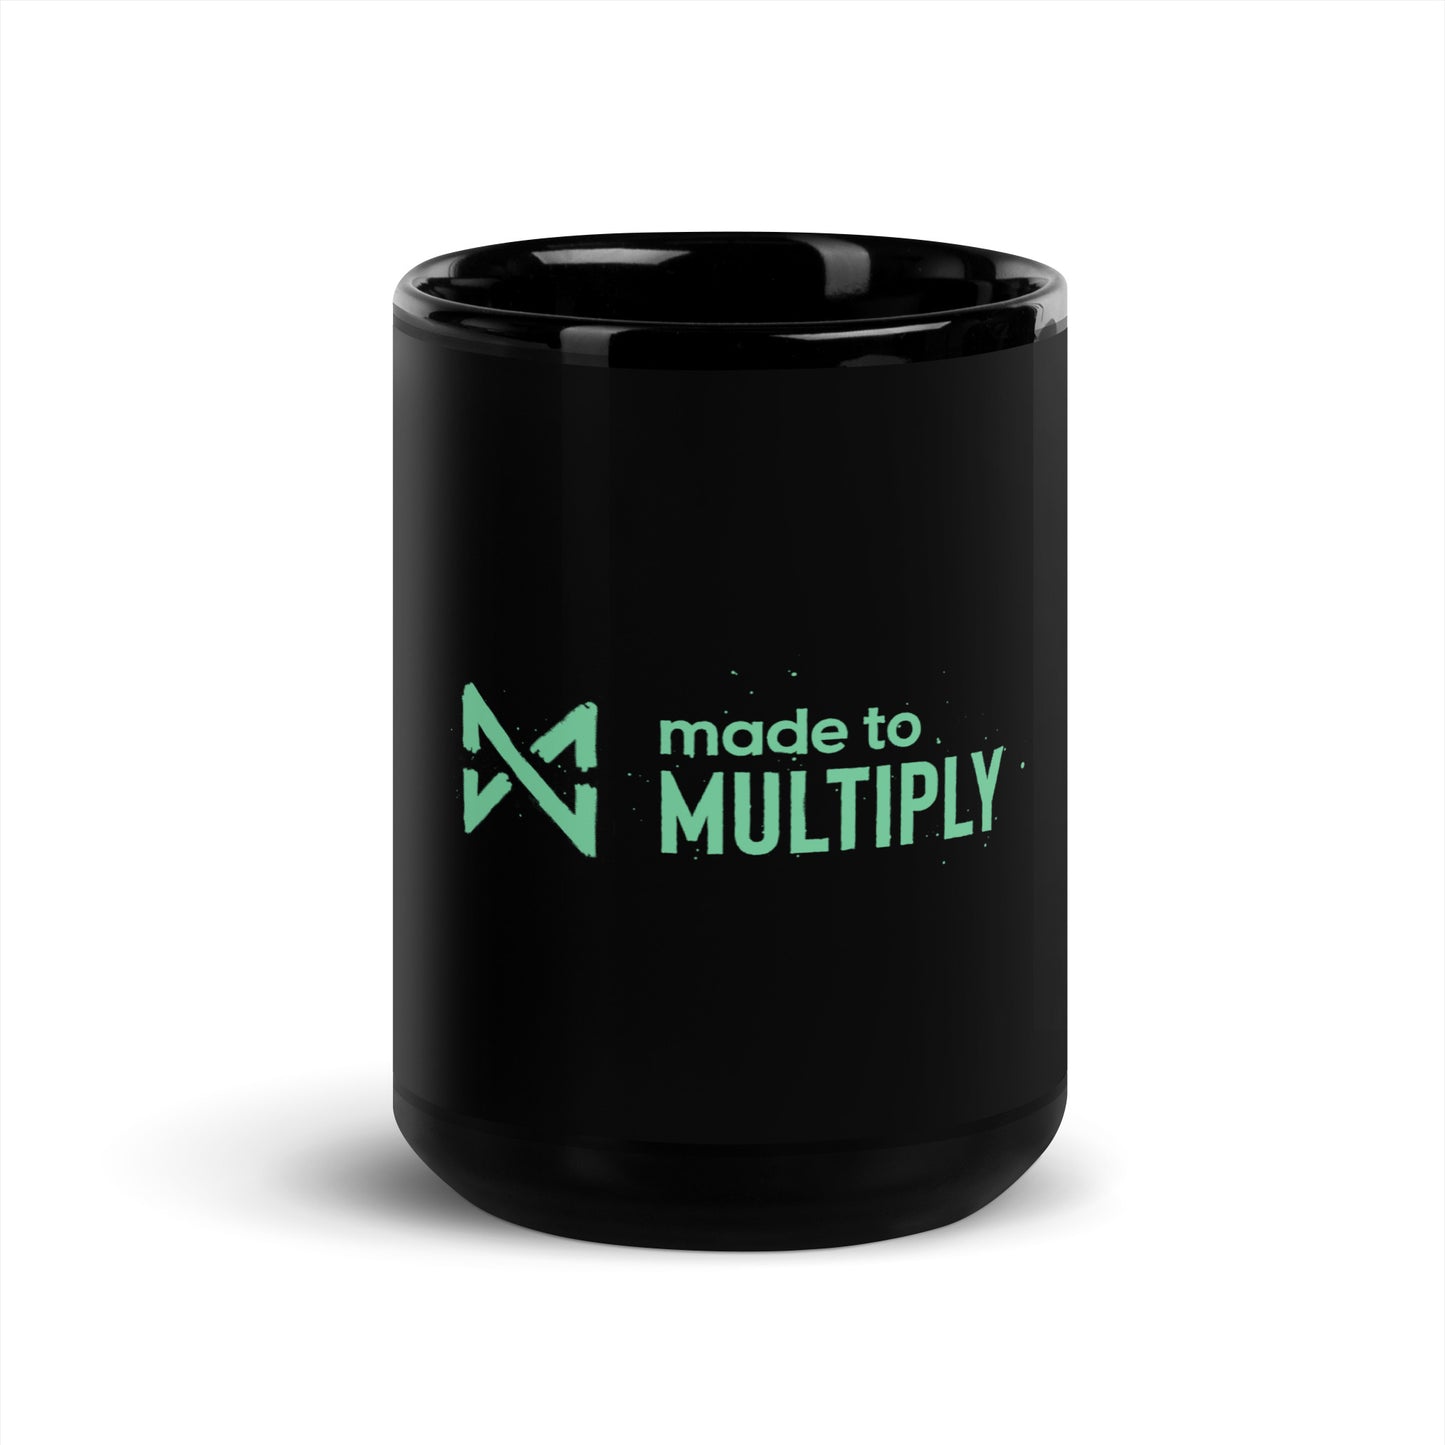 Made to Multiply - Black Glossy Mug